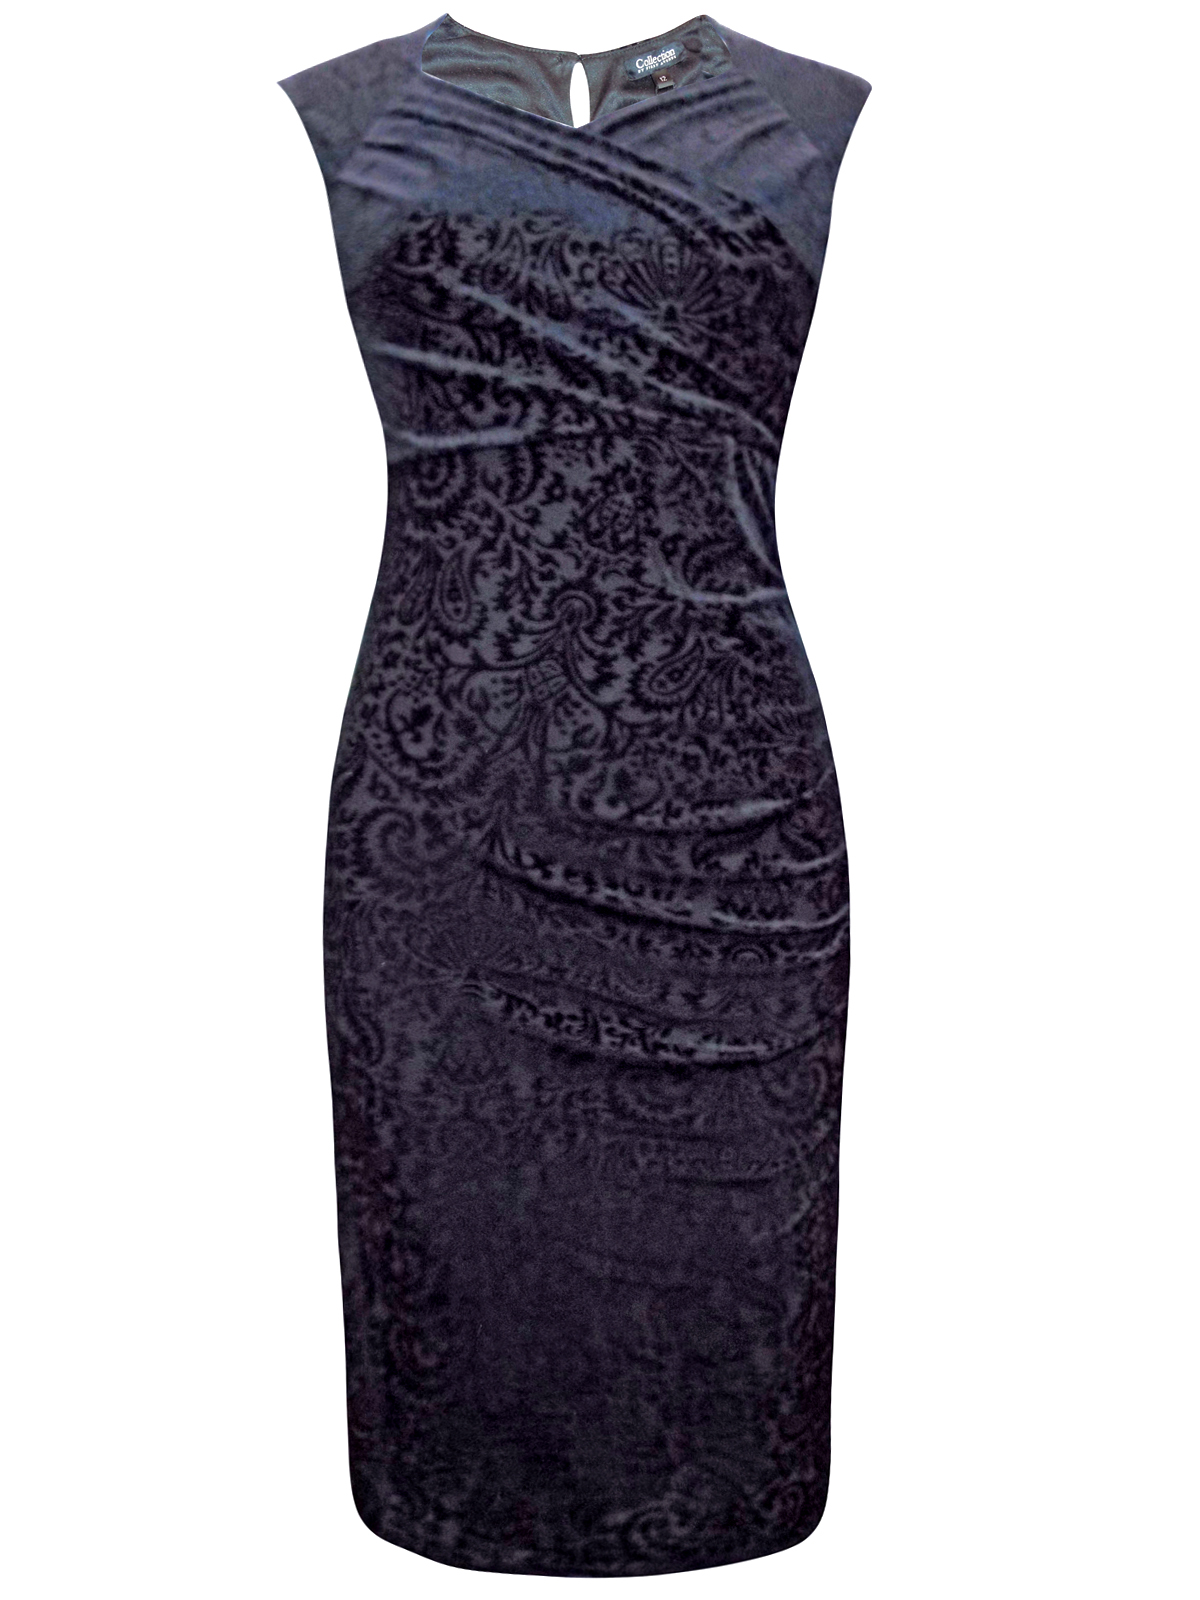 First Avenue BLACK Mock Wrap Damask Midi Dress - Size 12 to 20